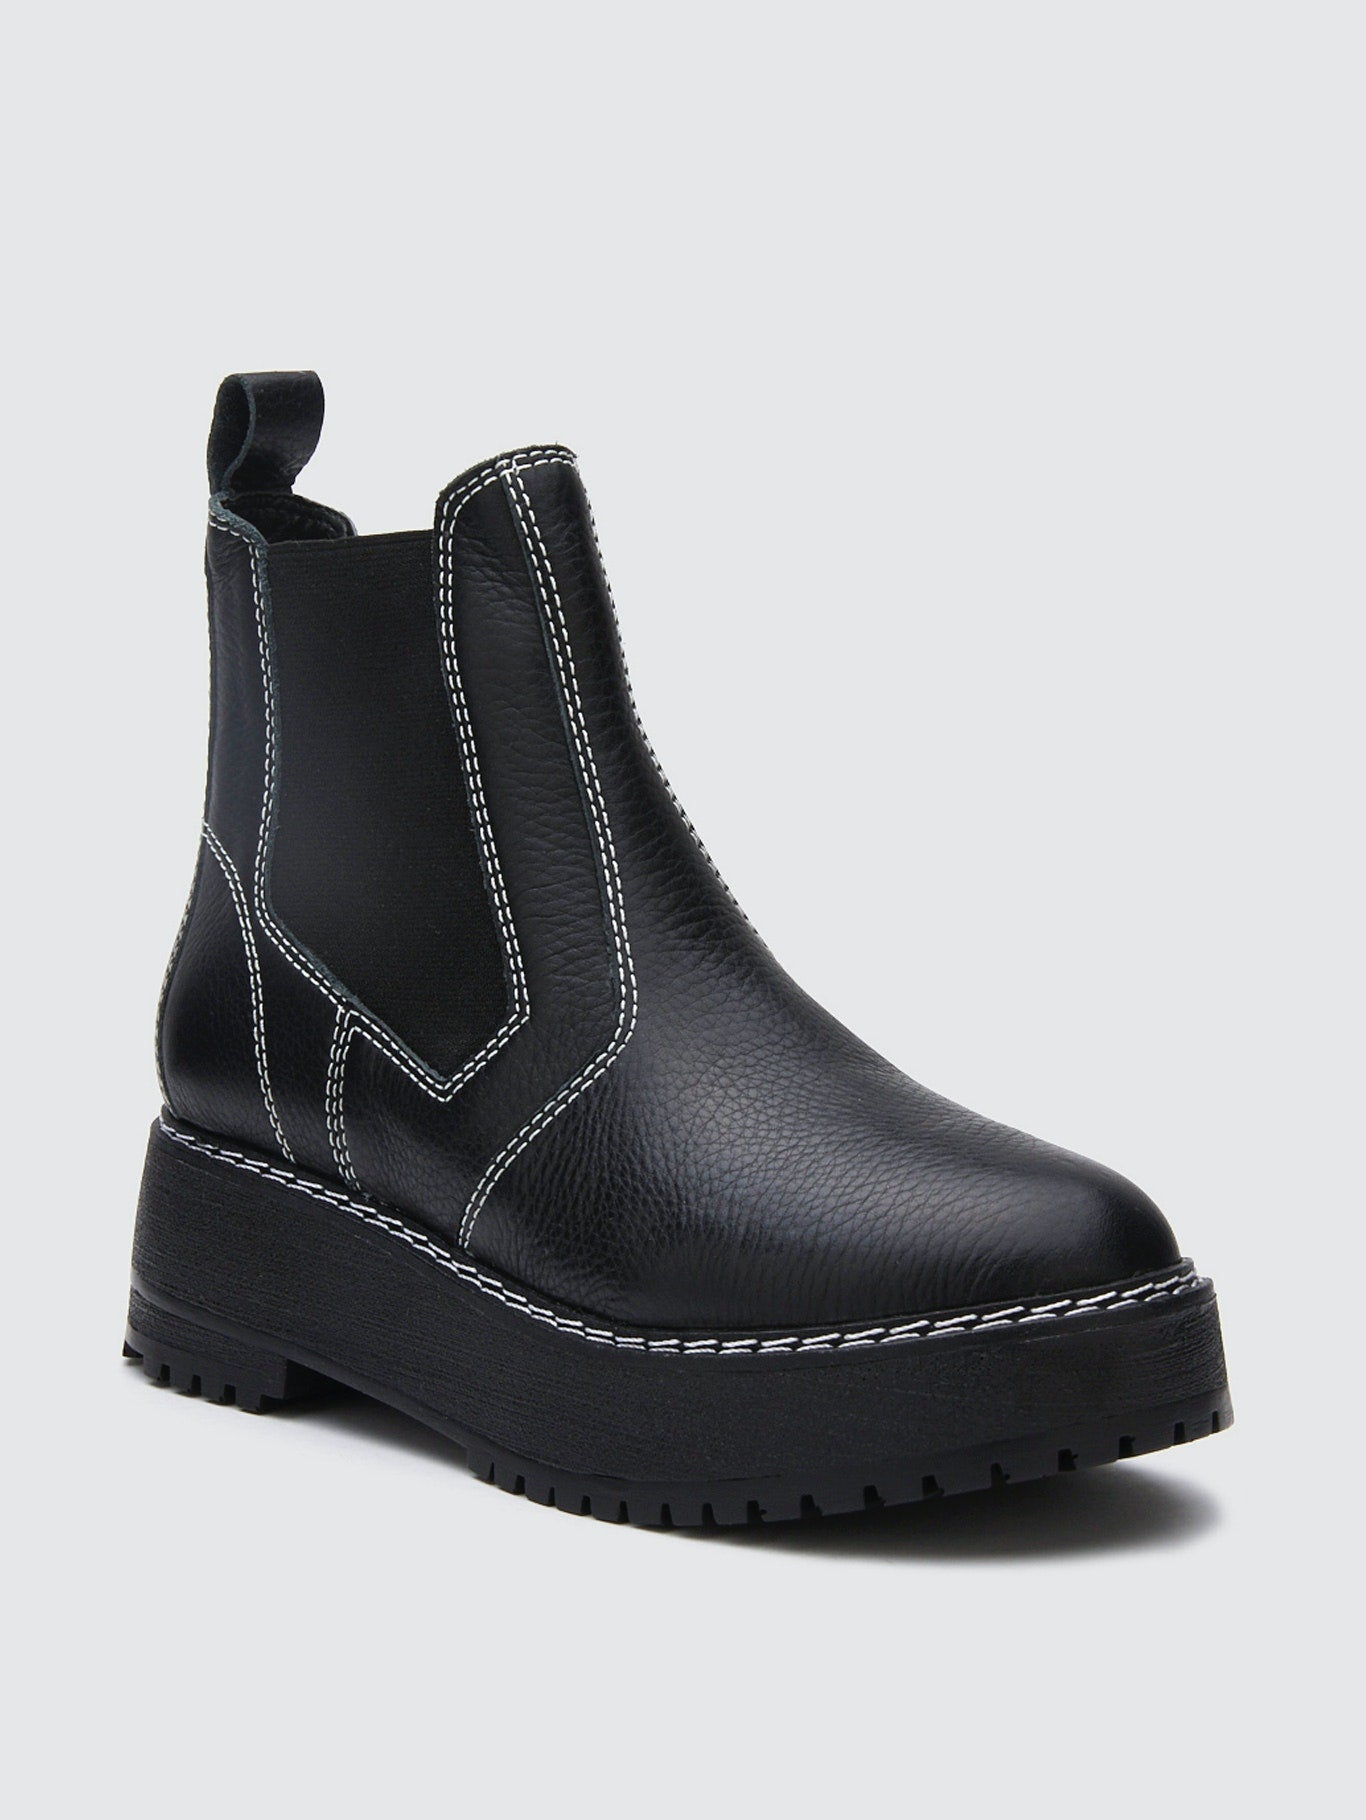 Matisse + Mason Leather Boot